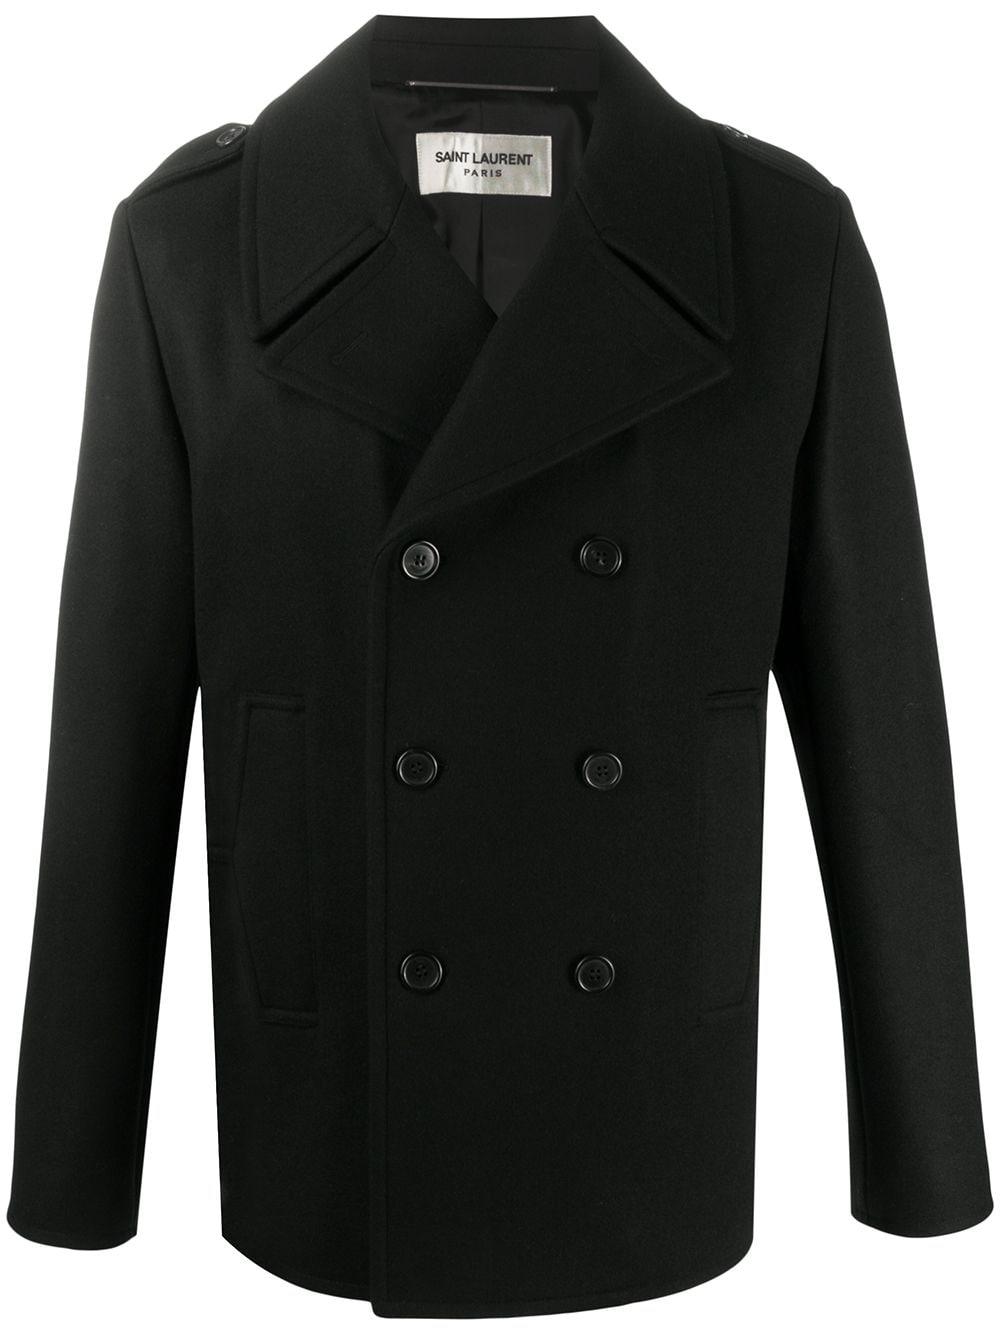 Saint Laurent Wool Peacoat in Black for Men - Lyst